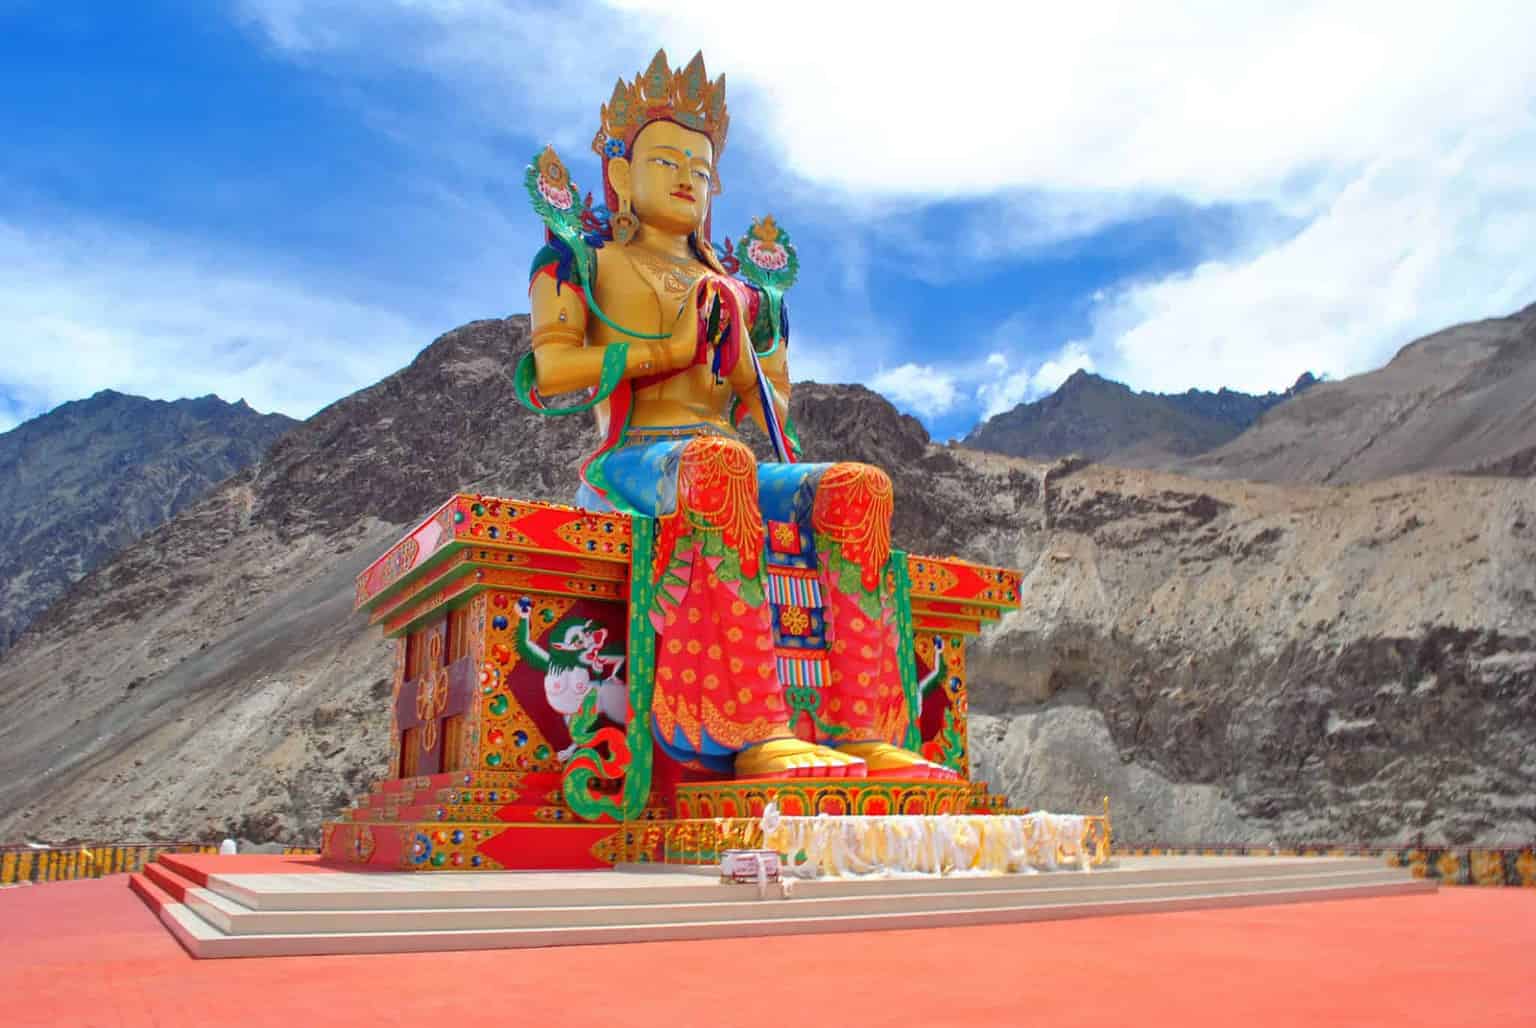 Ladakh Journey | Colors of Diskit Monastery, Nubra Valley